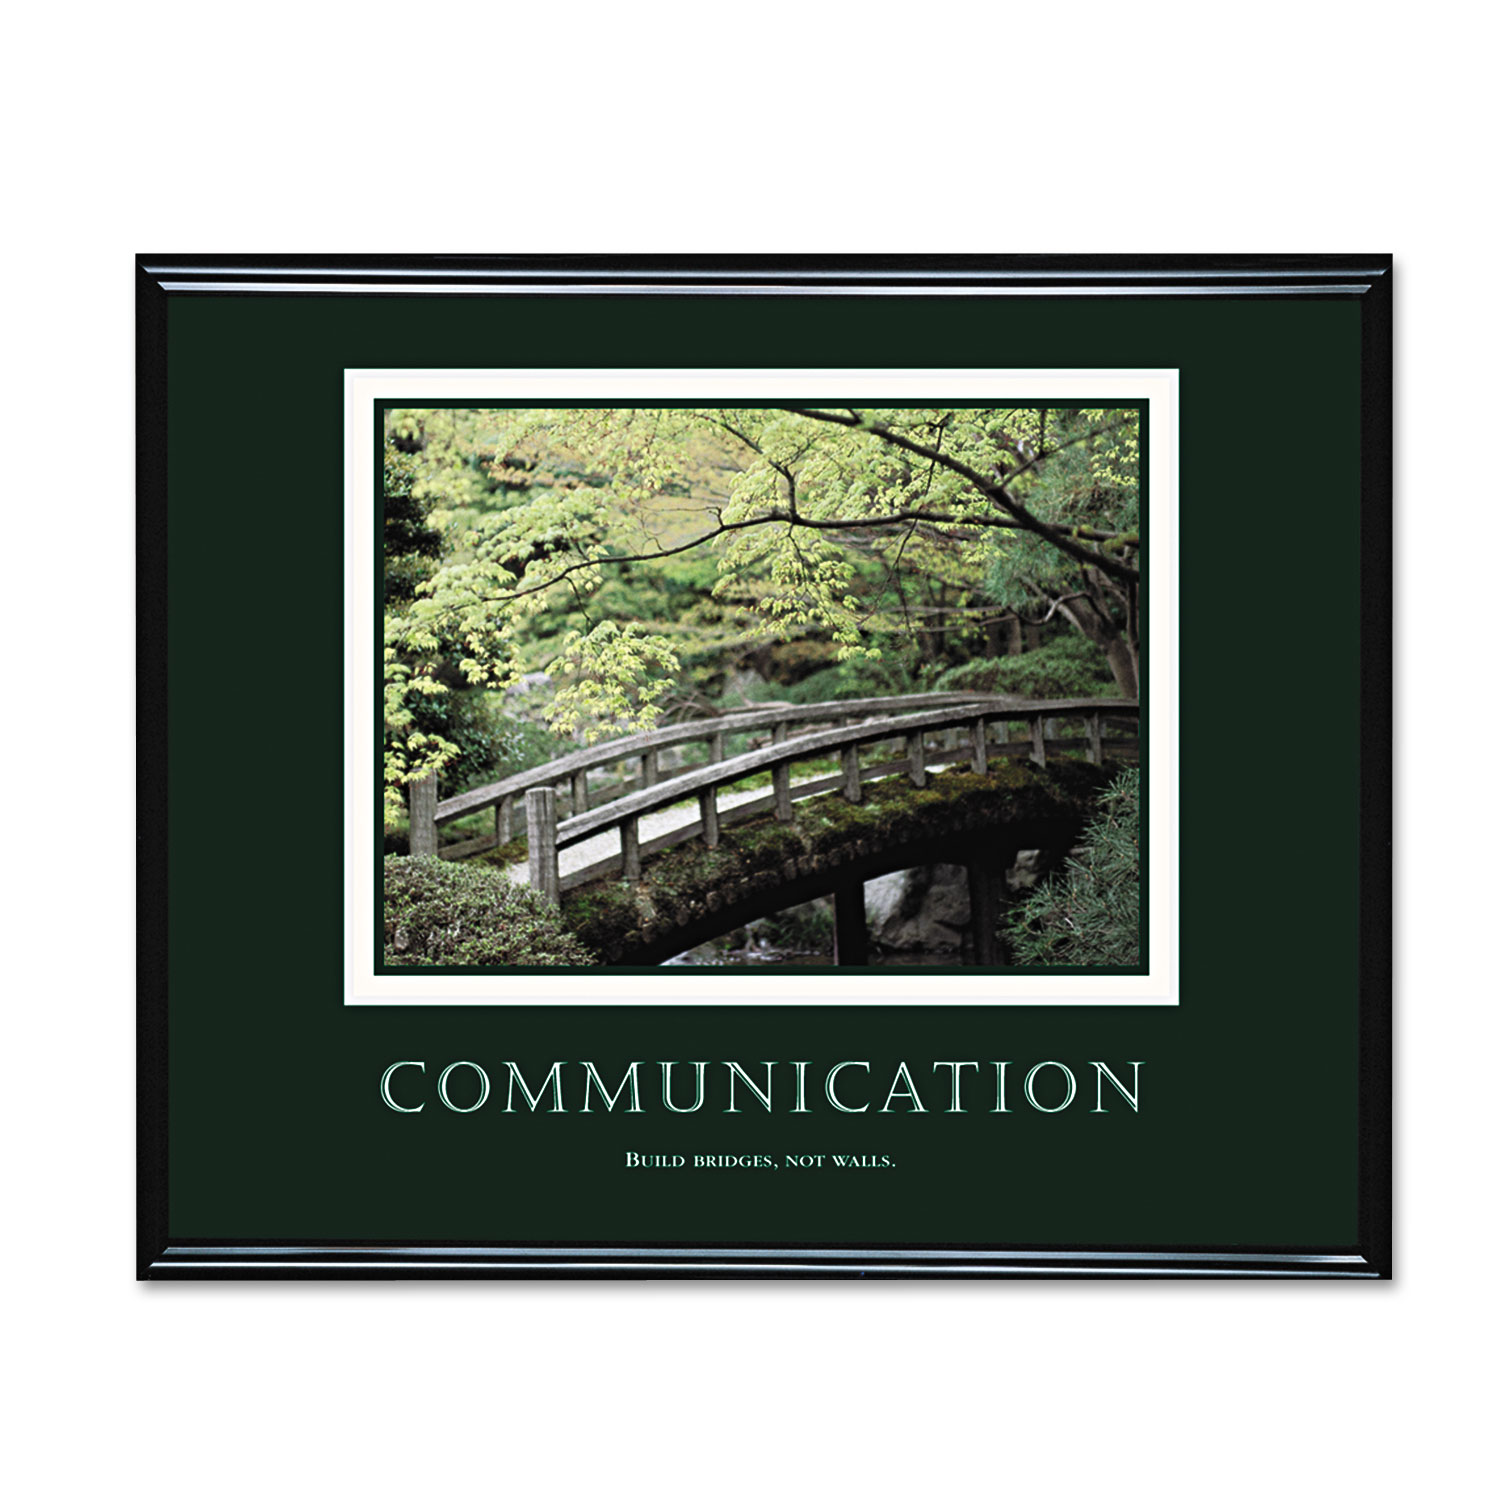 Communication Framed Motivational Print, 30w x 24h